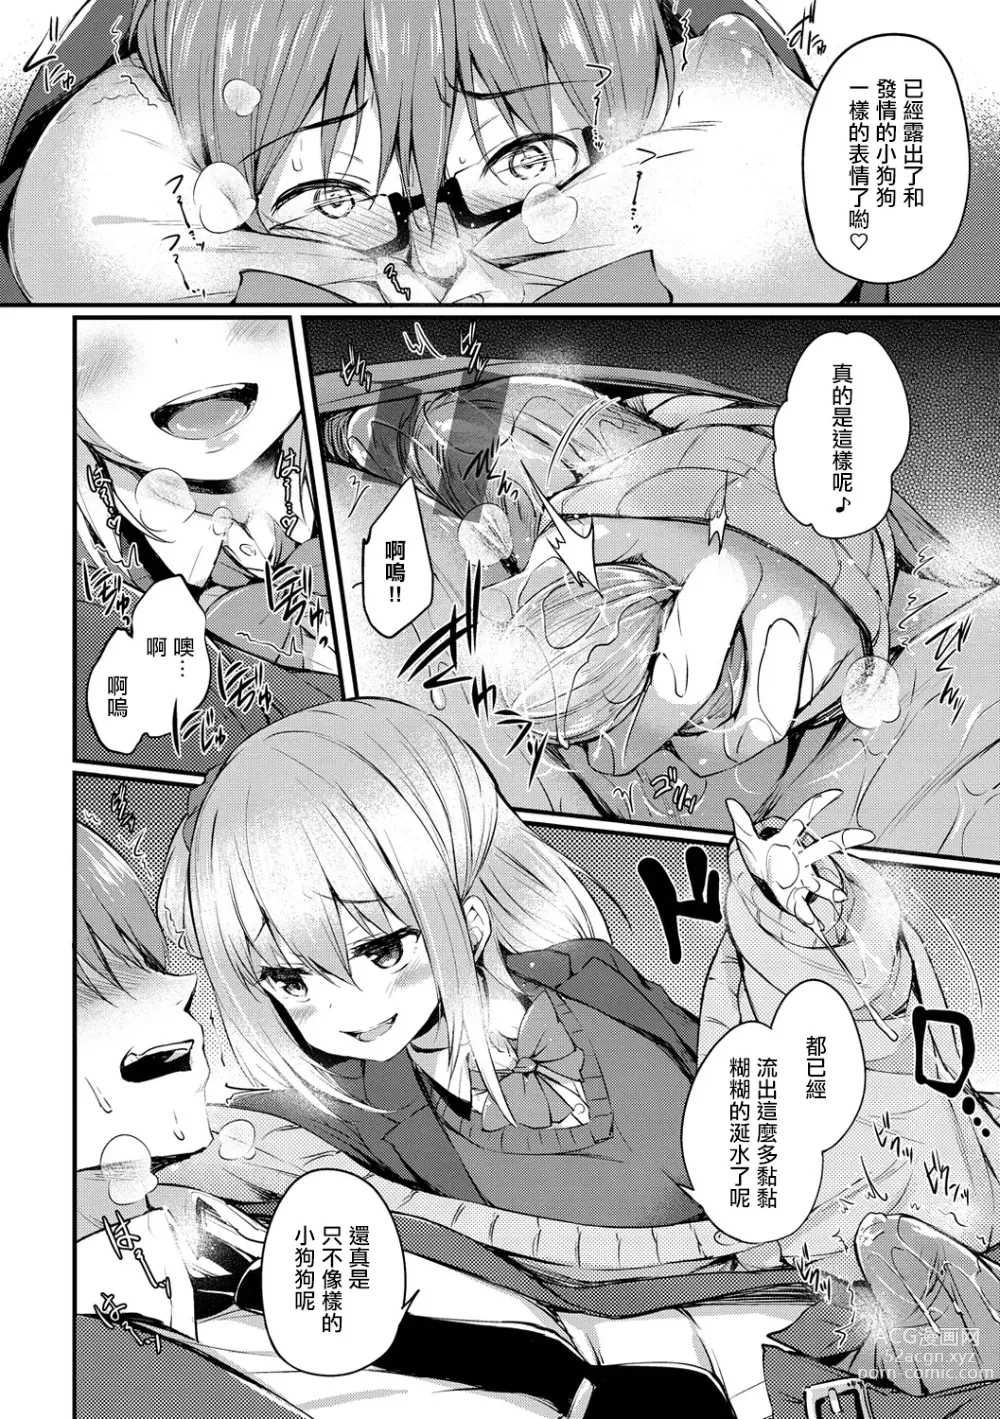 Page 6 of manga Sotsugyou Gokko